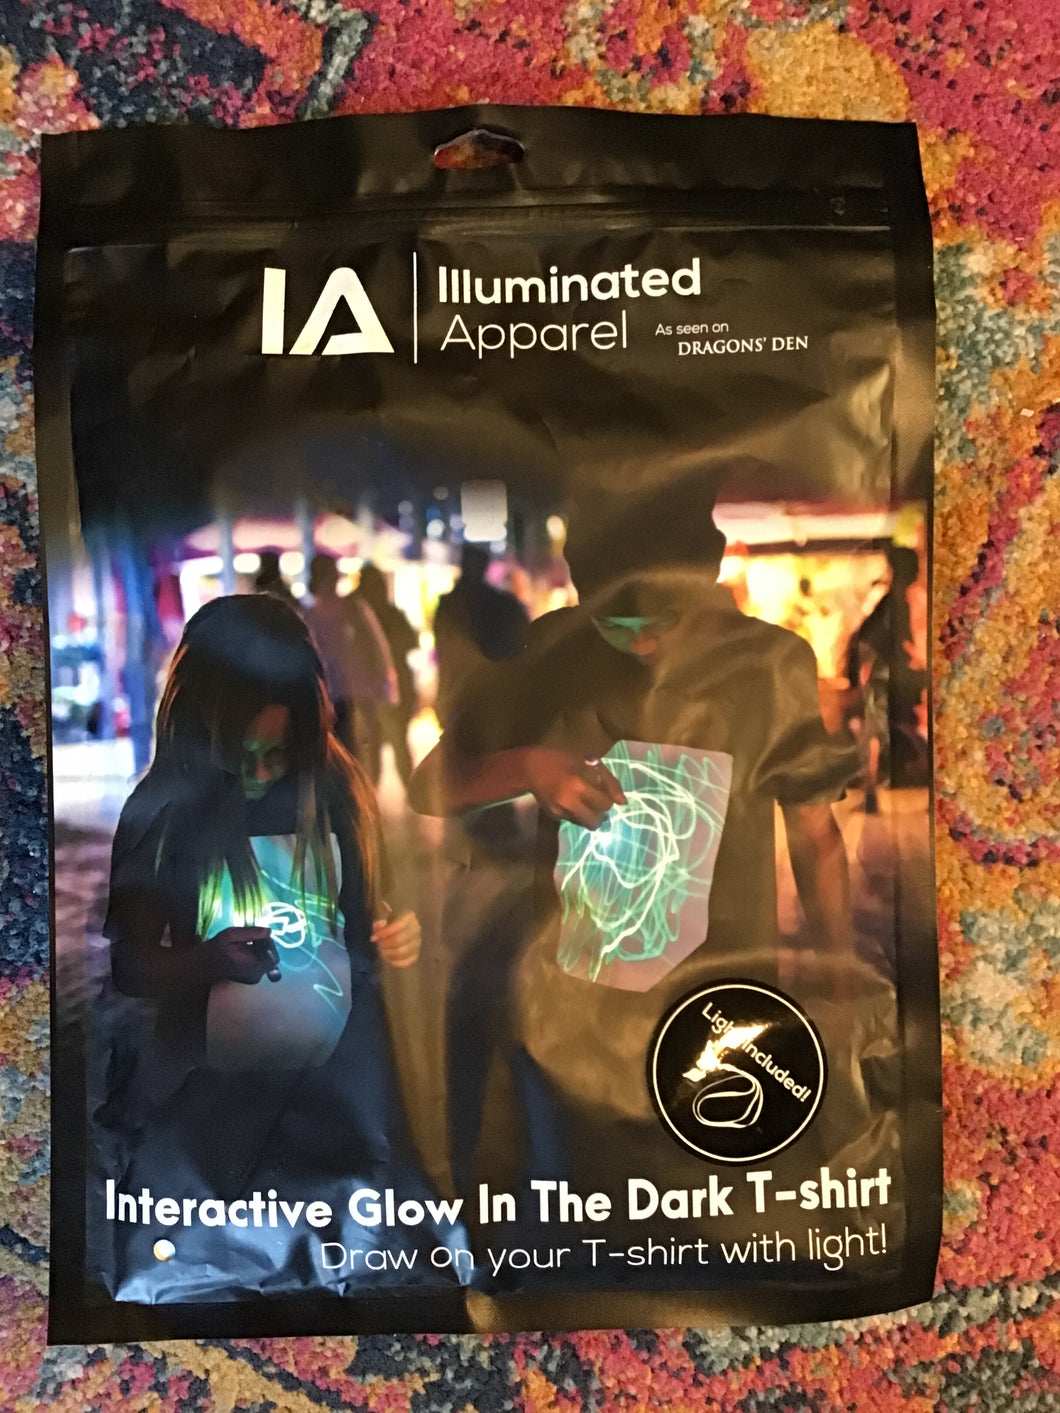 Interactive Glow In The Dark T-shirt